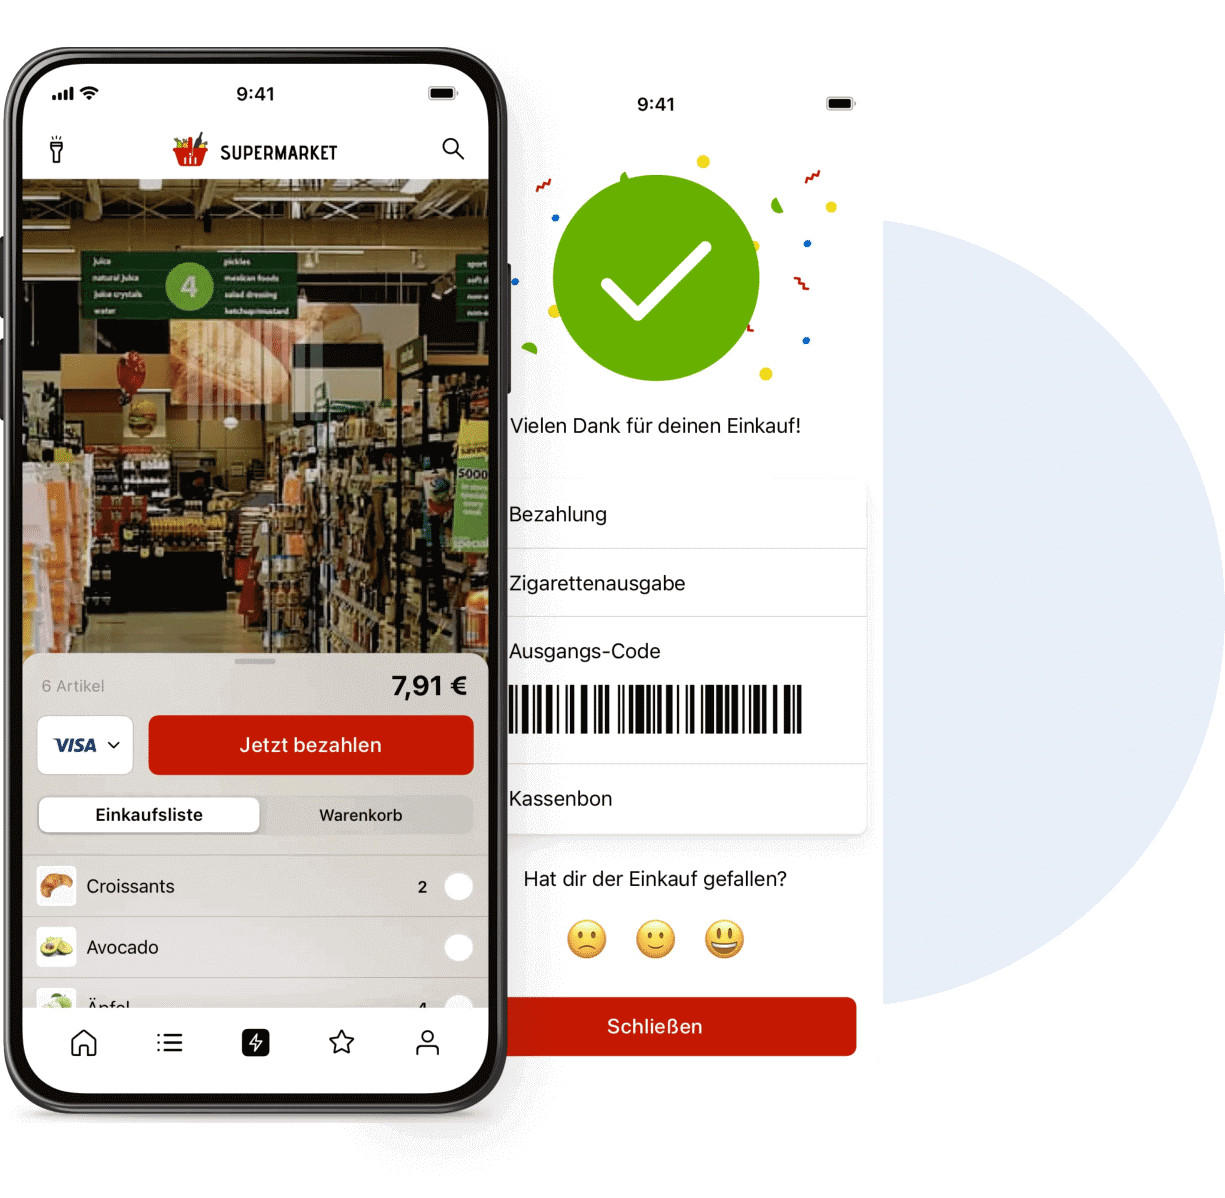 Supermarket basket interface displayed on the phone